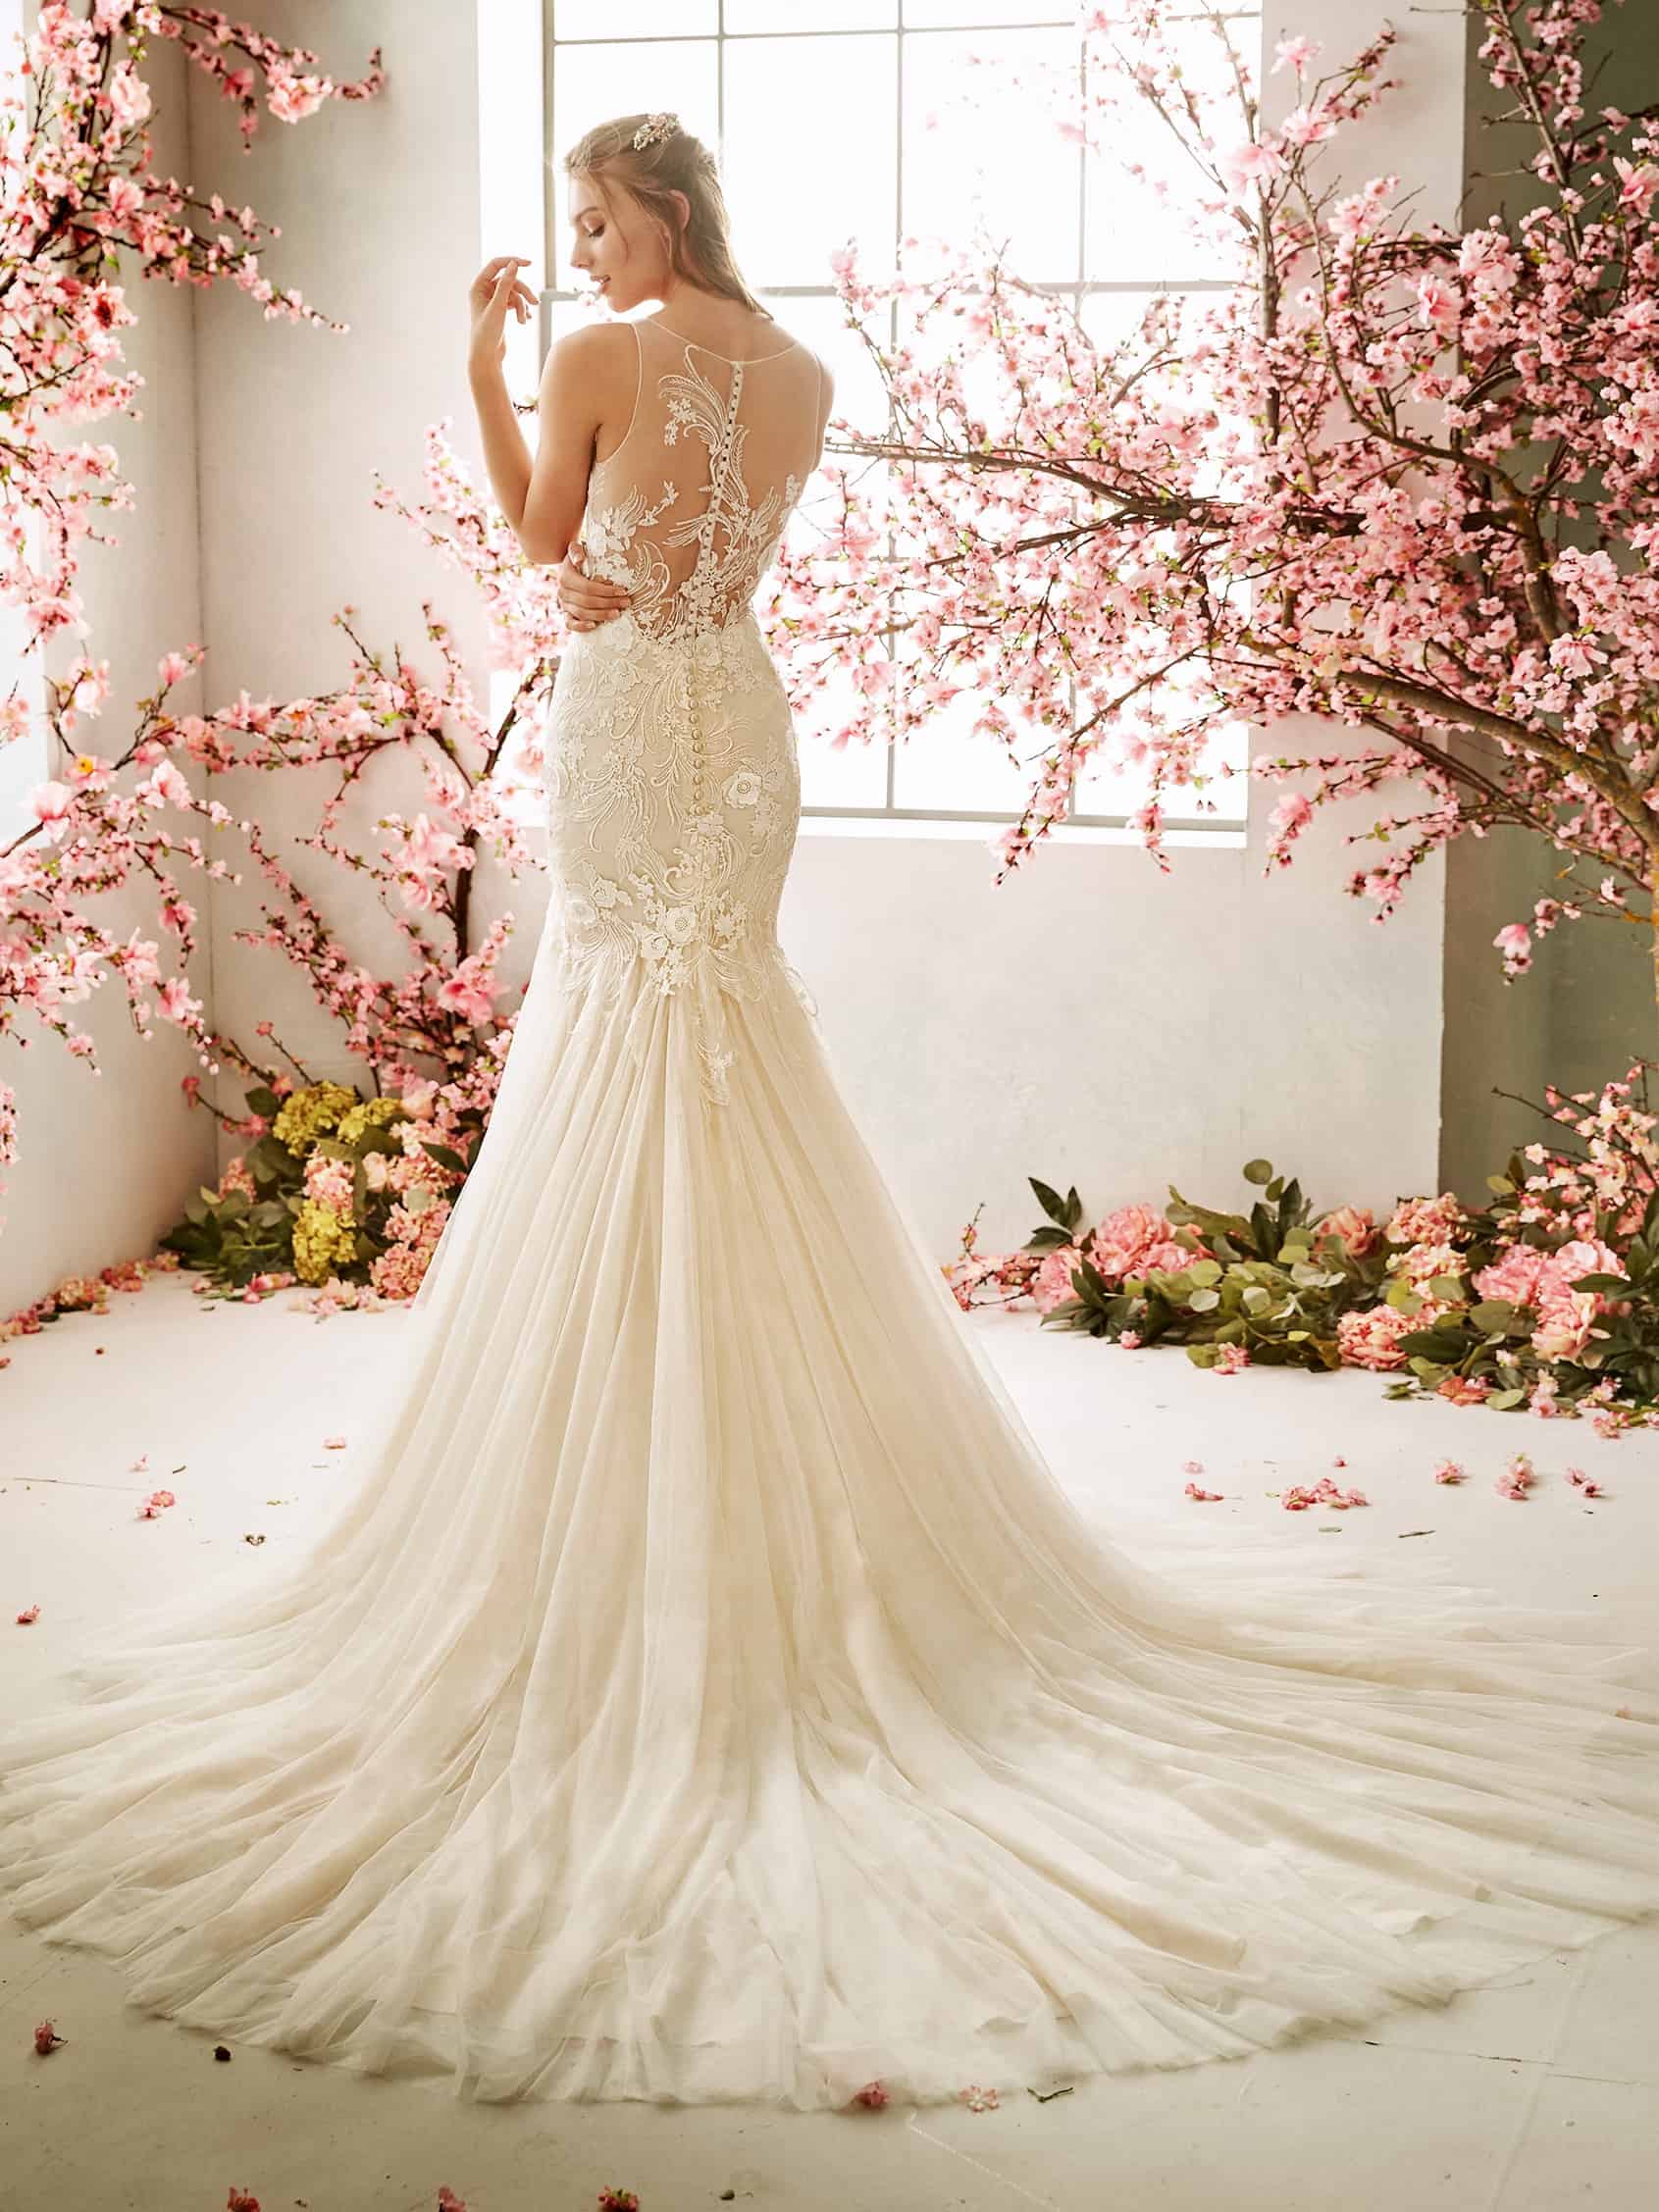 Mermaid Wedding Gown Sheer Neckline Frothy Tulle Train Modes Bridal Nz 6292